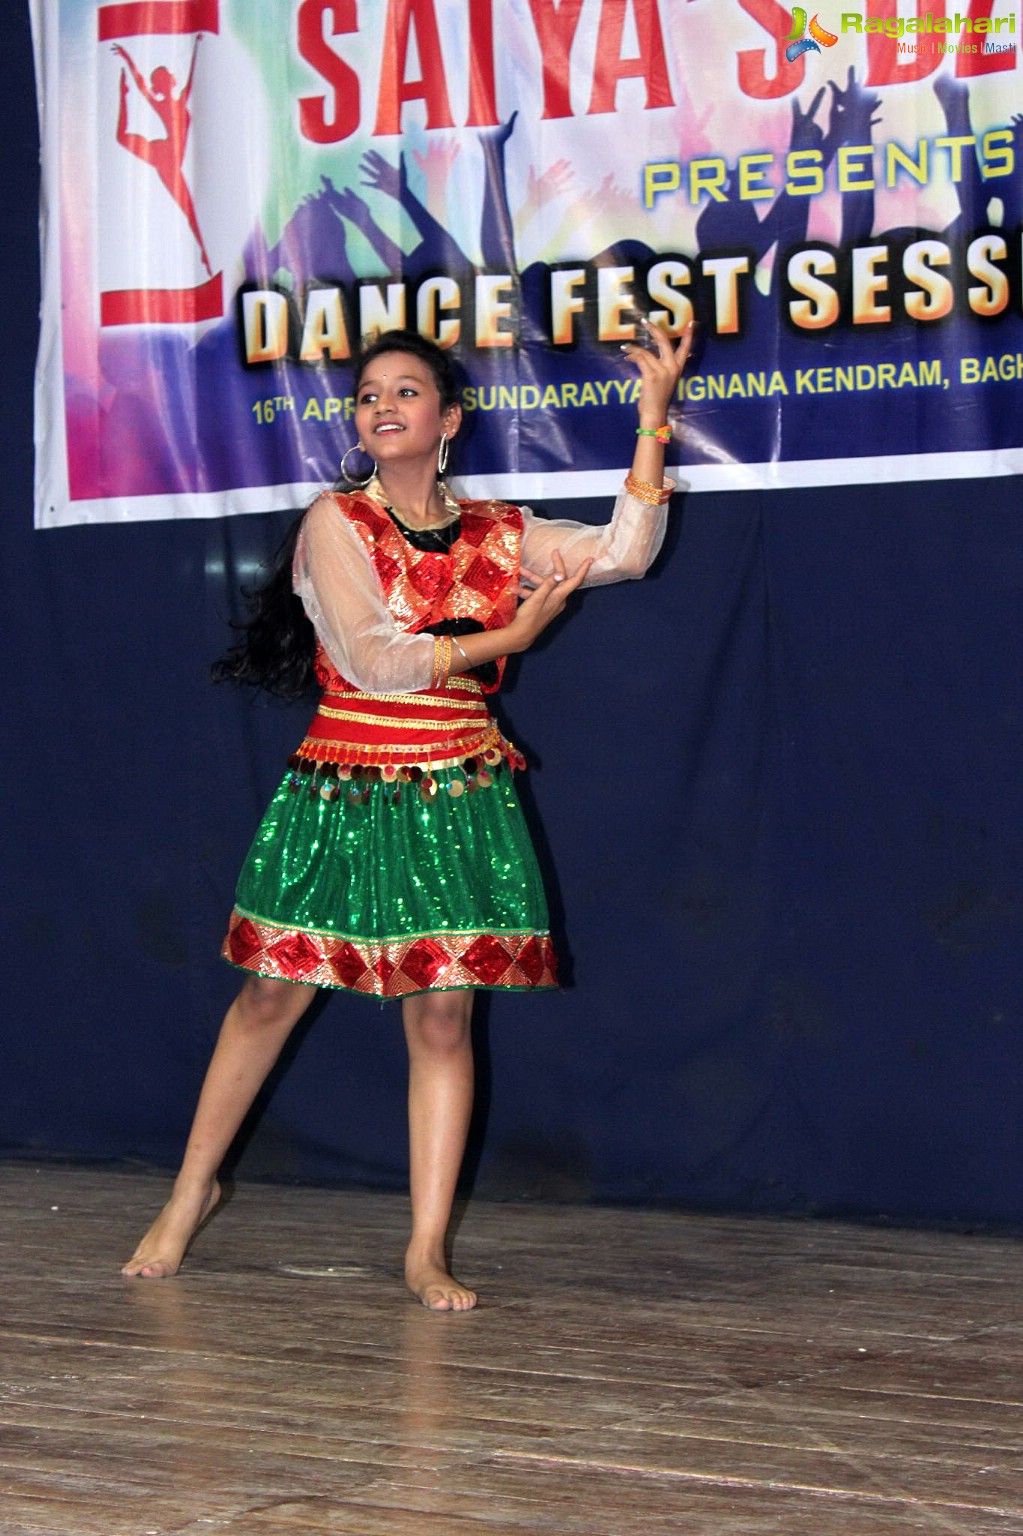 Satya's Dzone Dance Fest-2 at Sundarayya Vignana Kendram